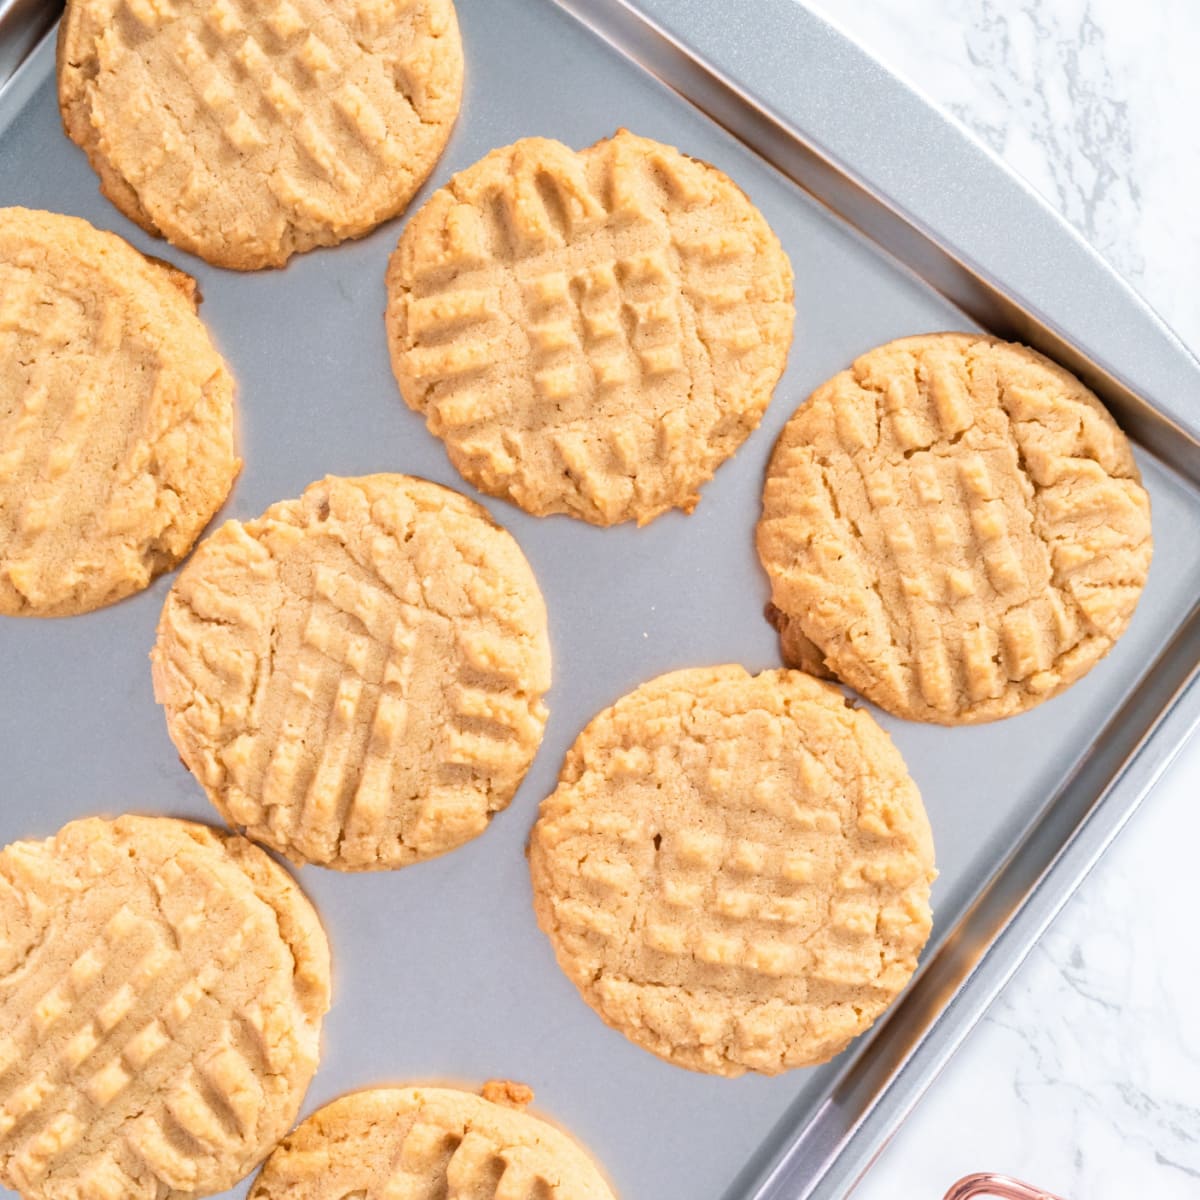 Peanut butter cookies on sheet pan.